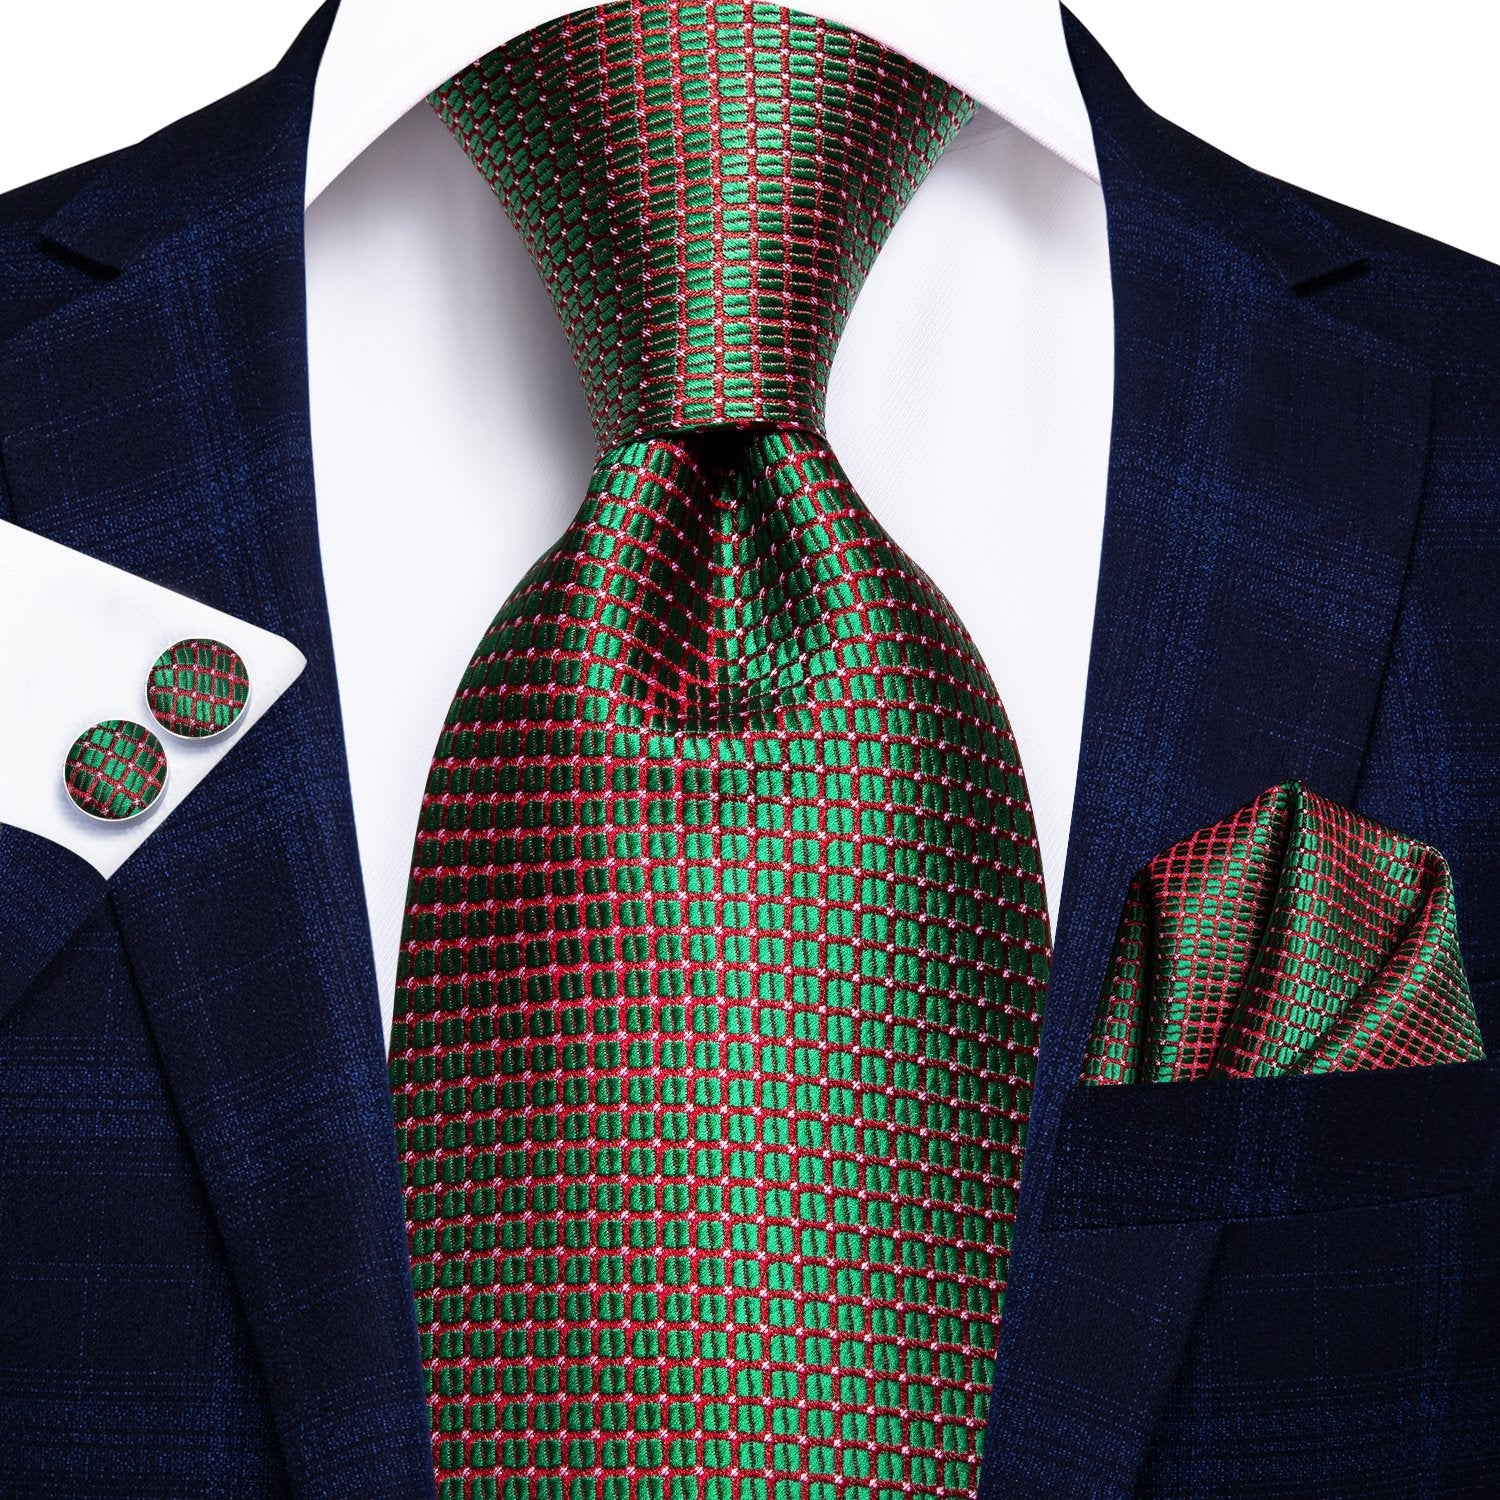  Green Tie Shining Green Plaid Tie Pocket Square Cufflinks Set